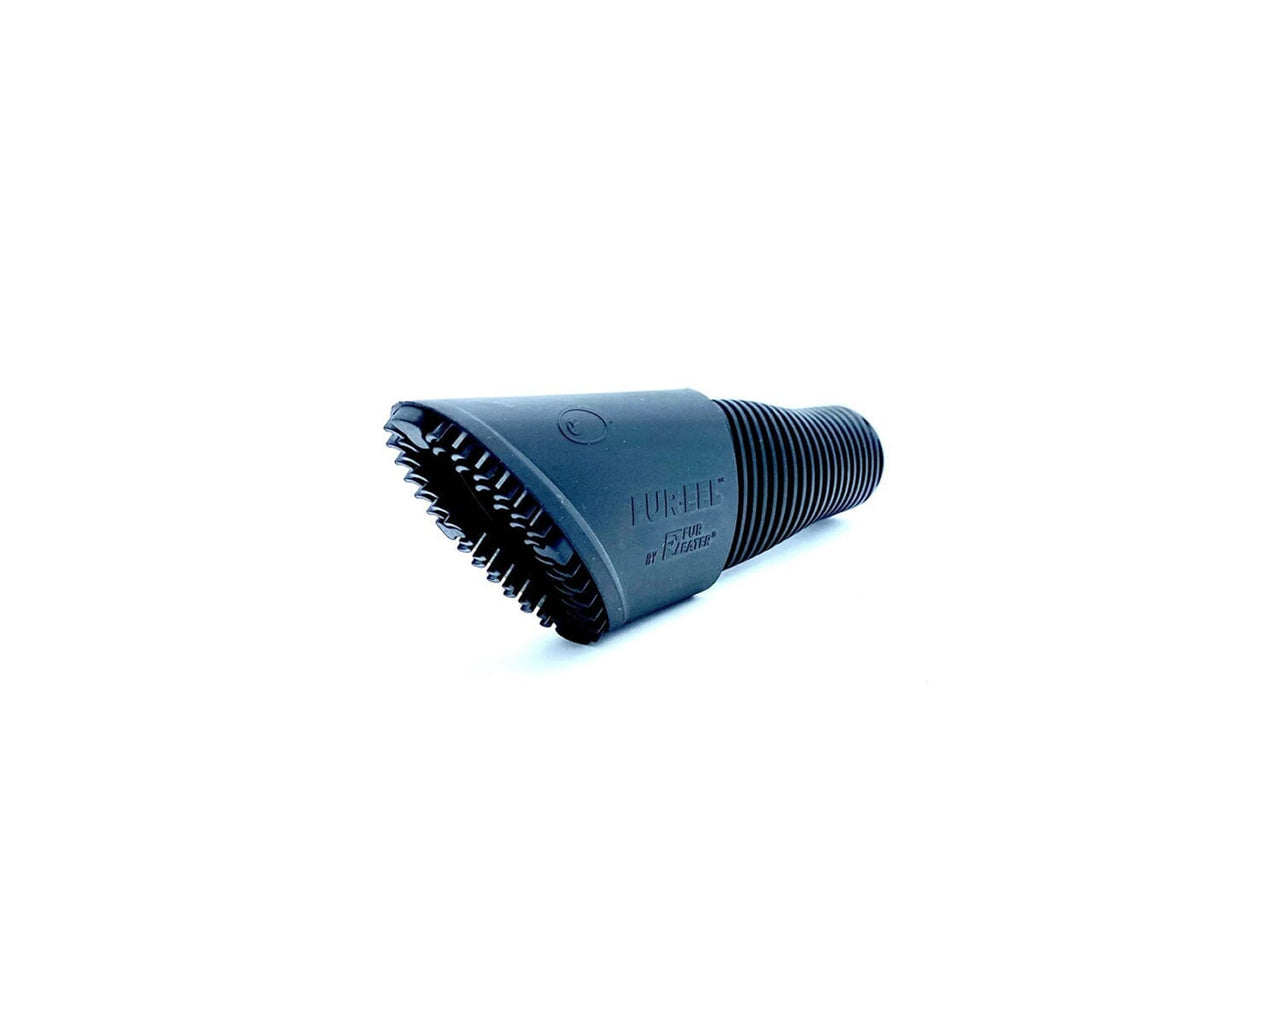 FUR-EEL PRO PET HAIR REMOVAL VACUUM TOOL & FANG COMBO KIT Vacuum Tool for Pet Hair Fur-eel Pro & Fang Kit 